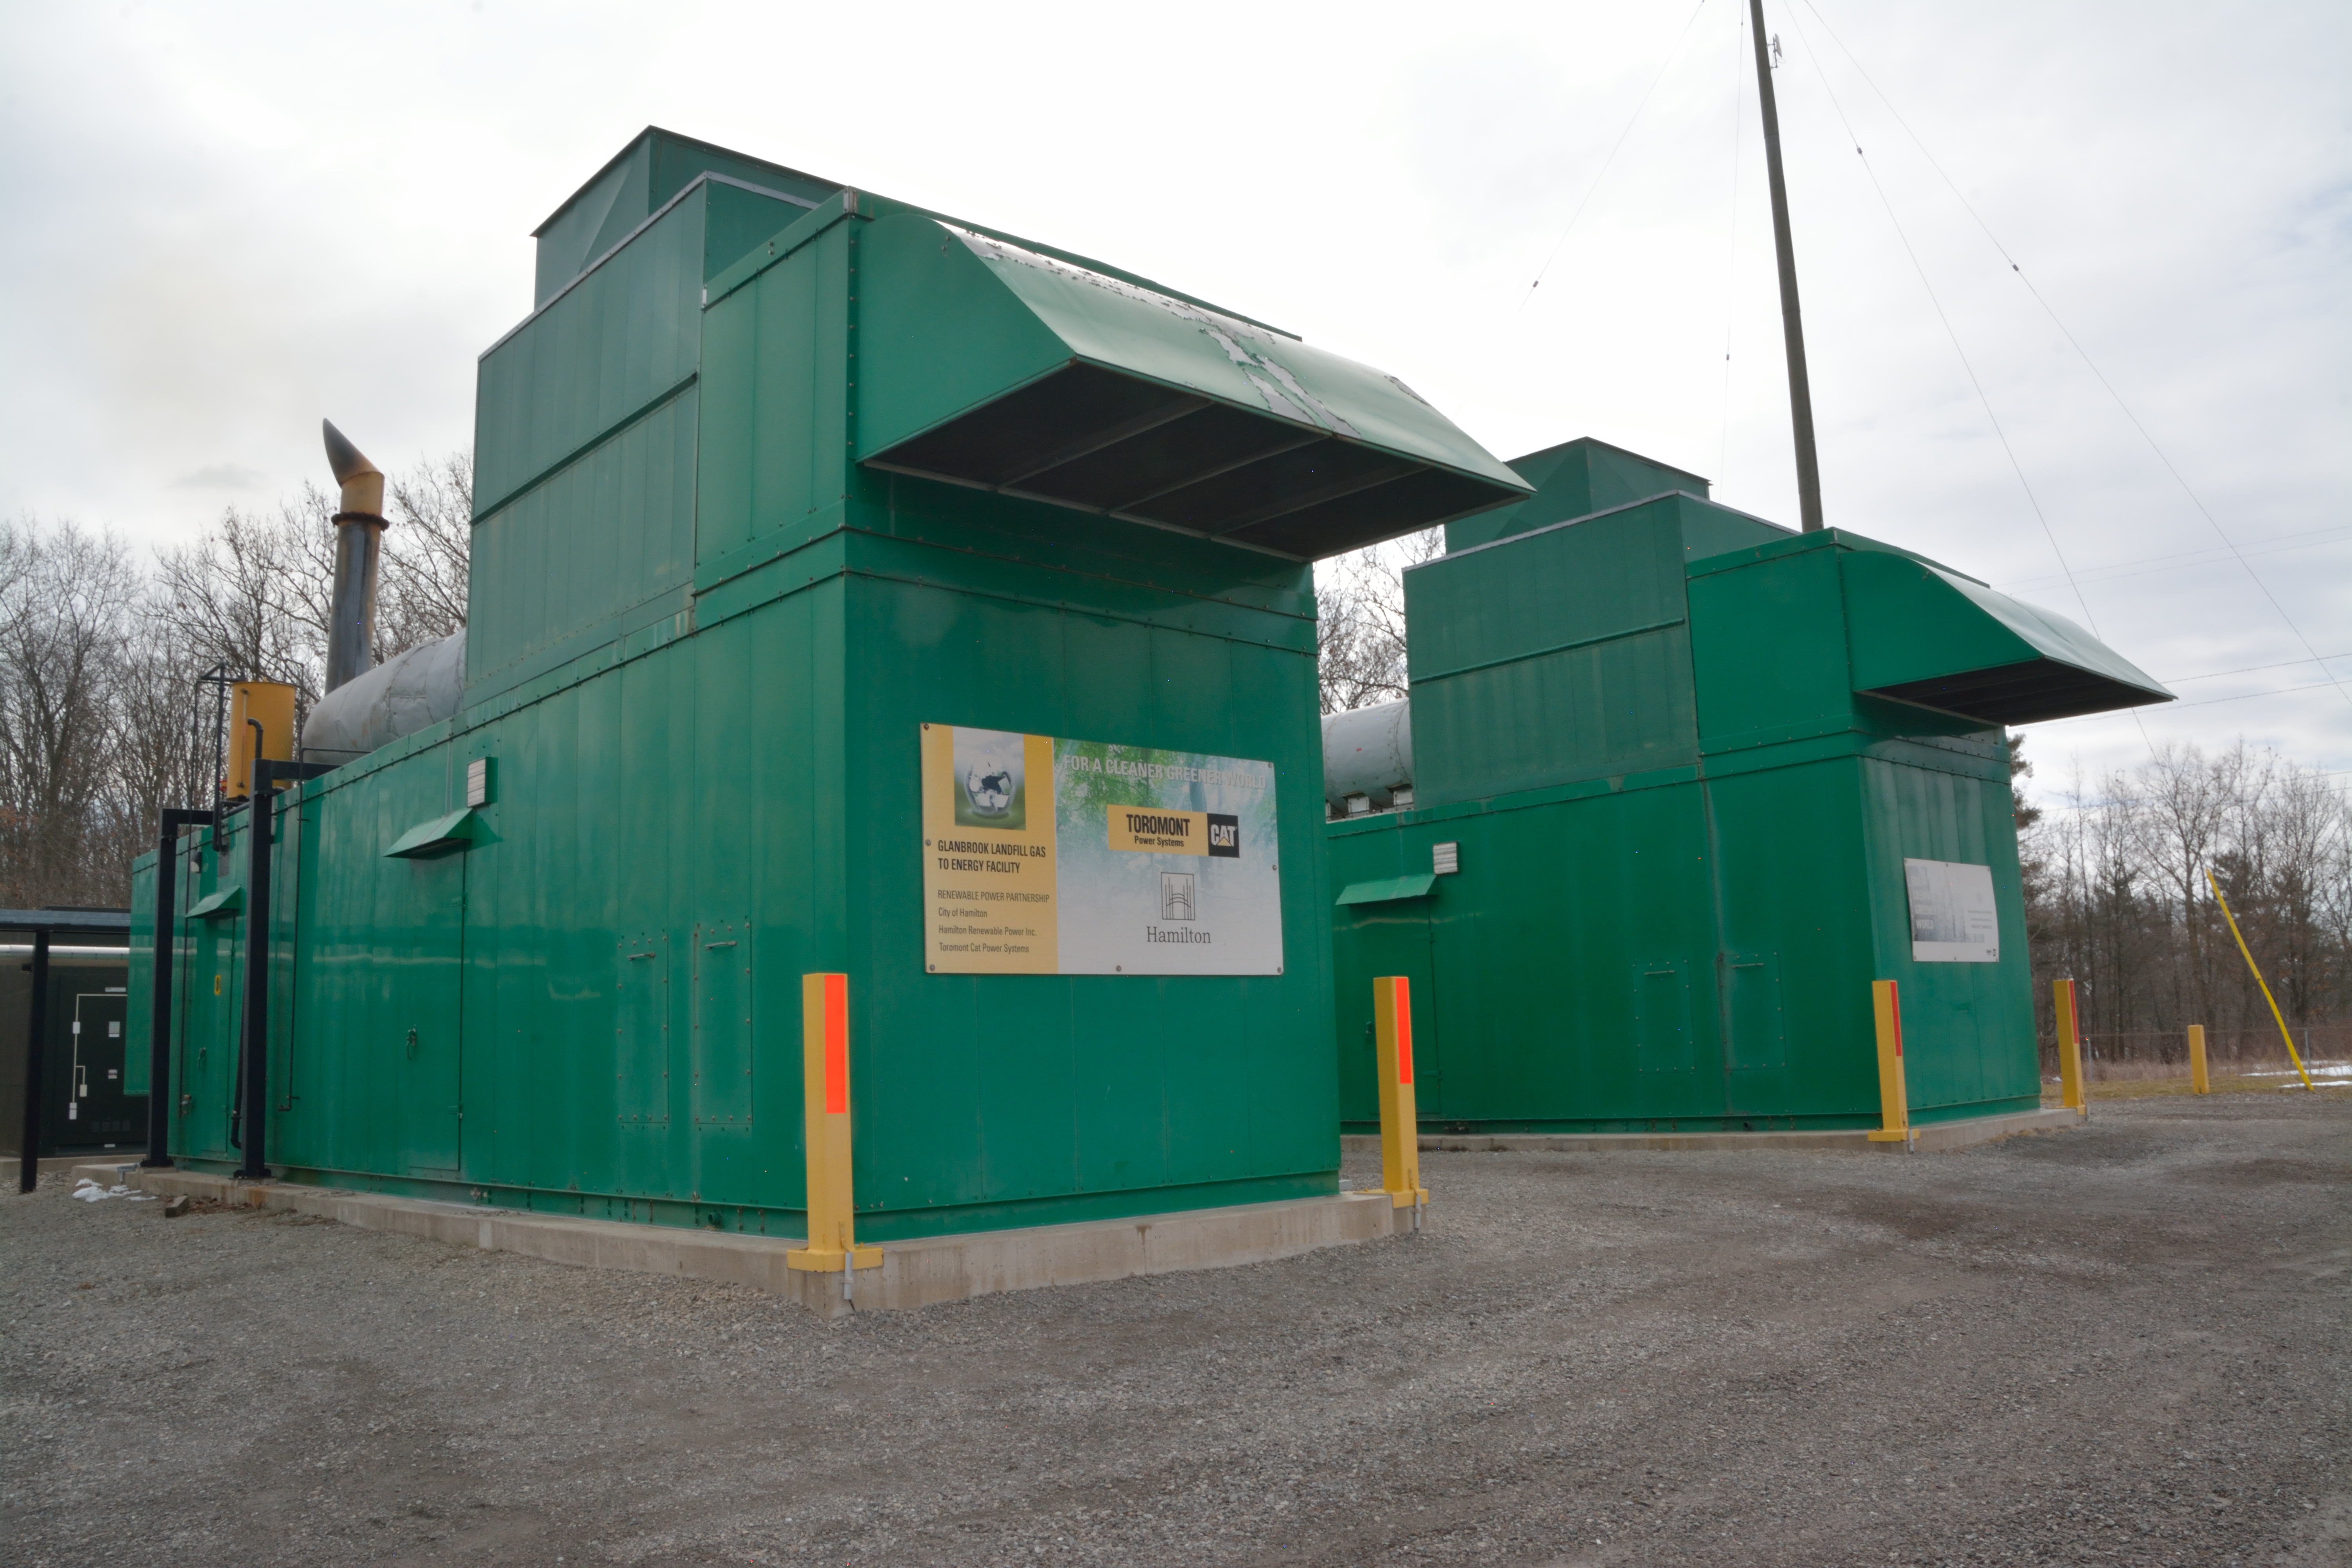 Glanbrook landfill generator